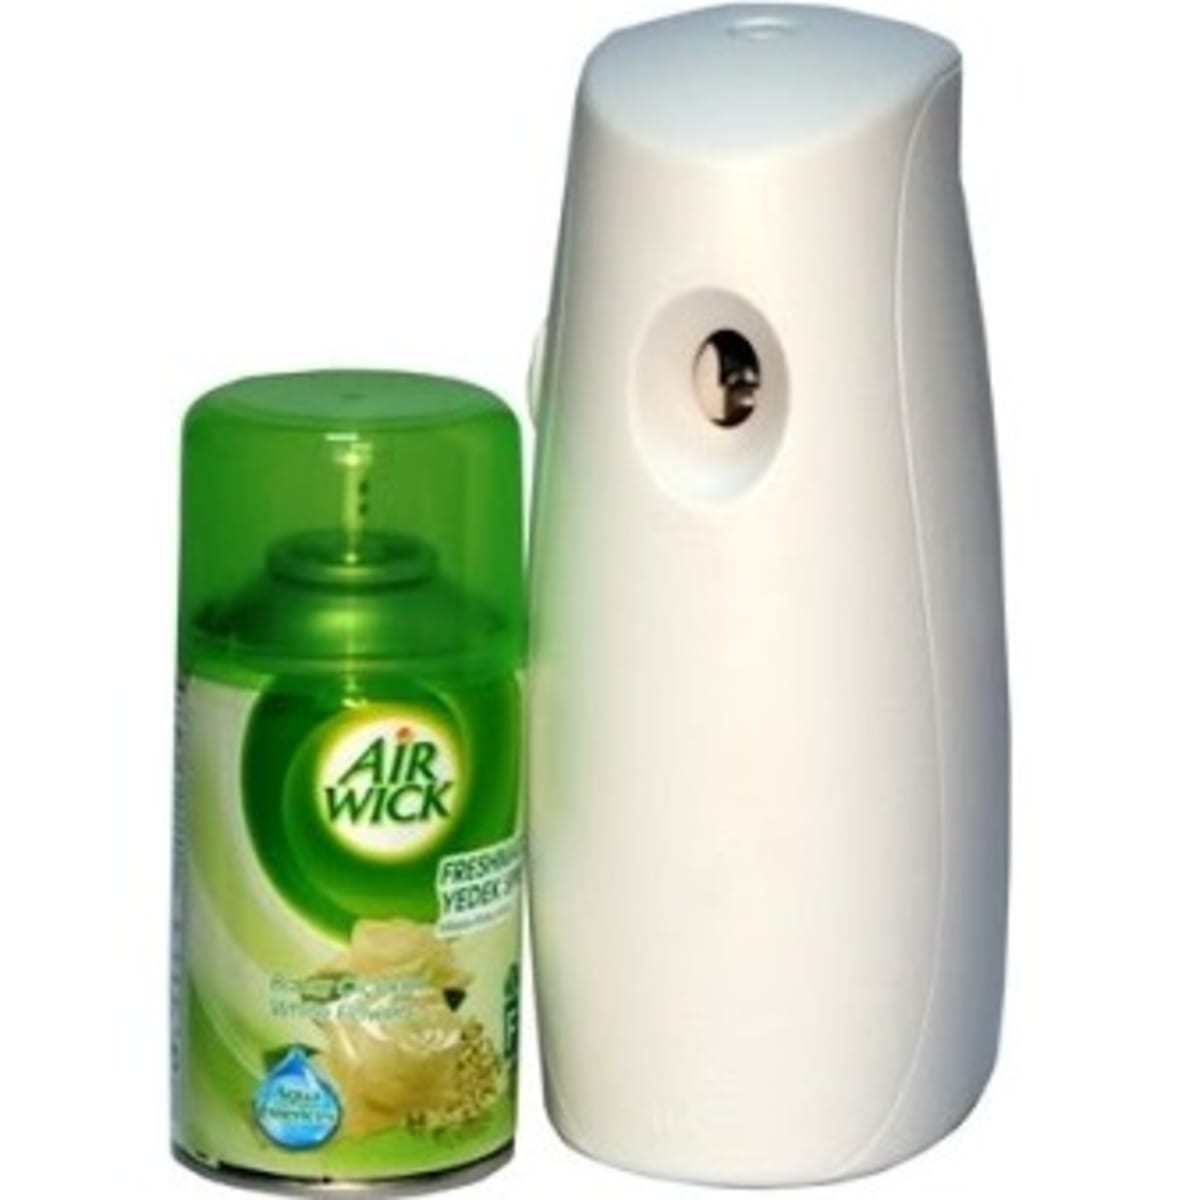 Air Wick Automatic Dispense Air Freshener